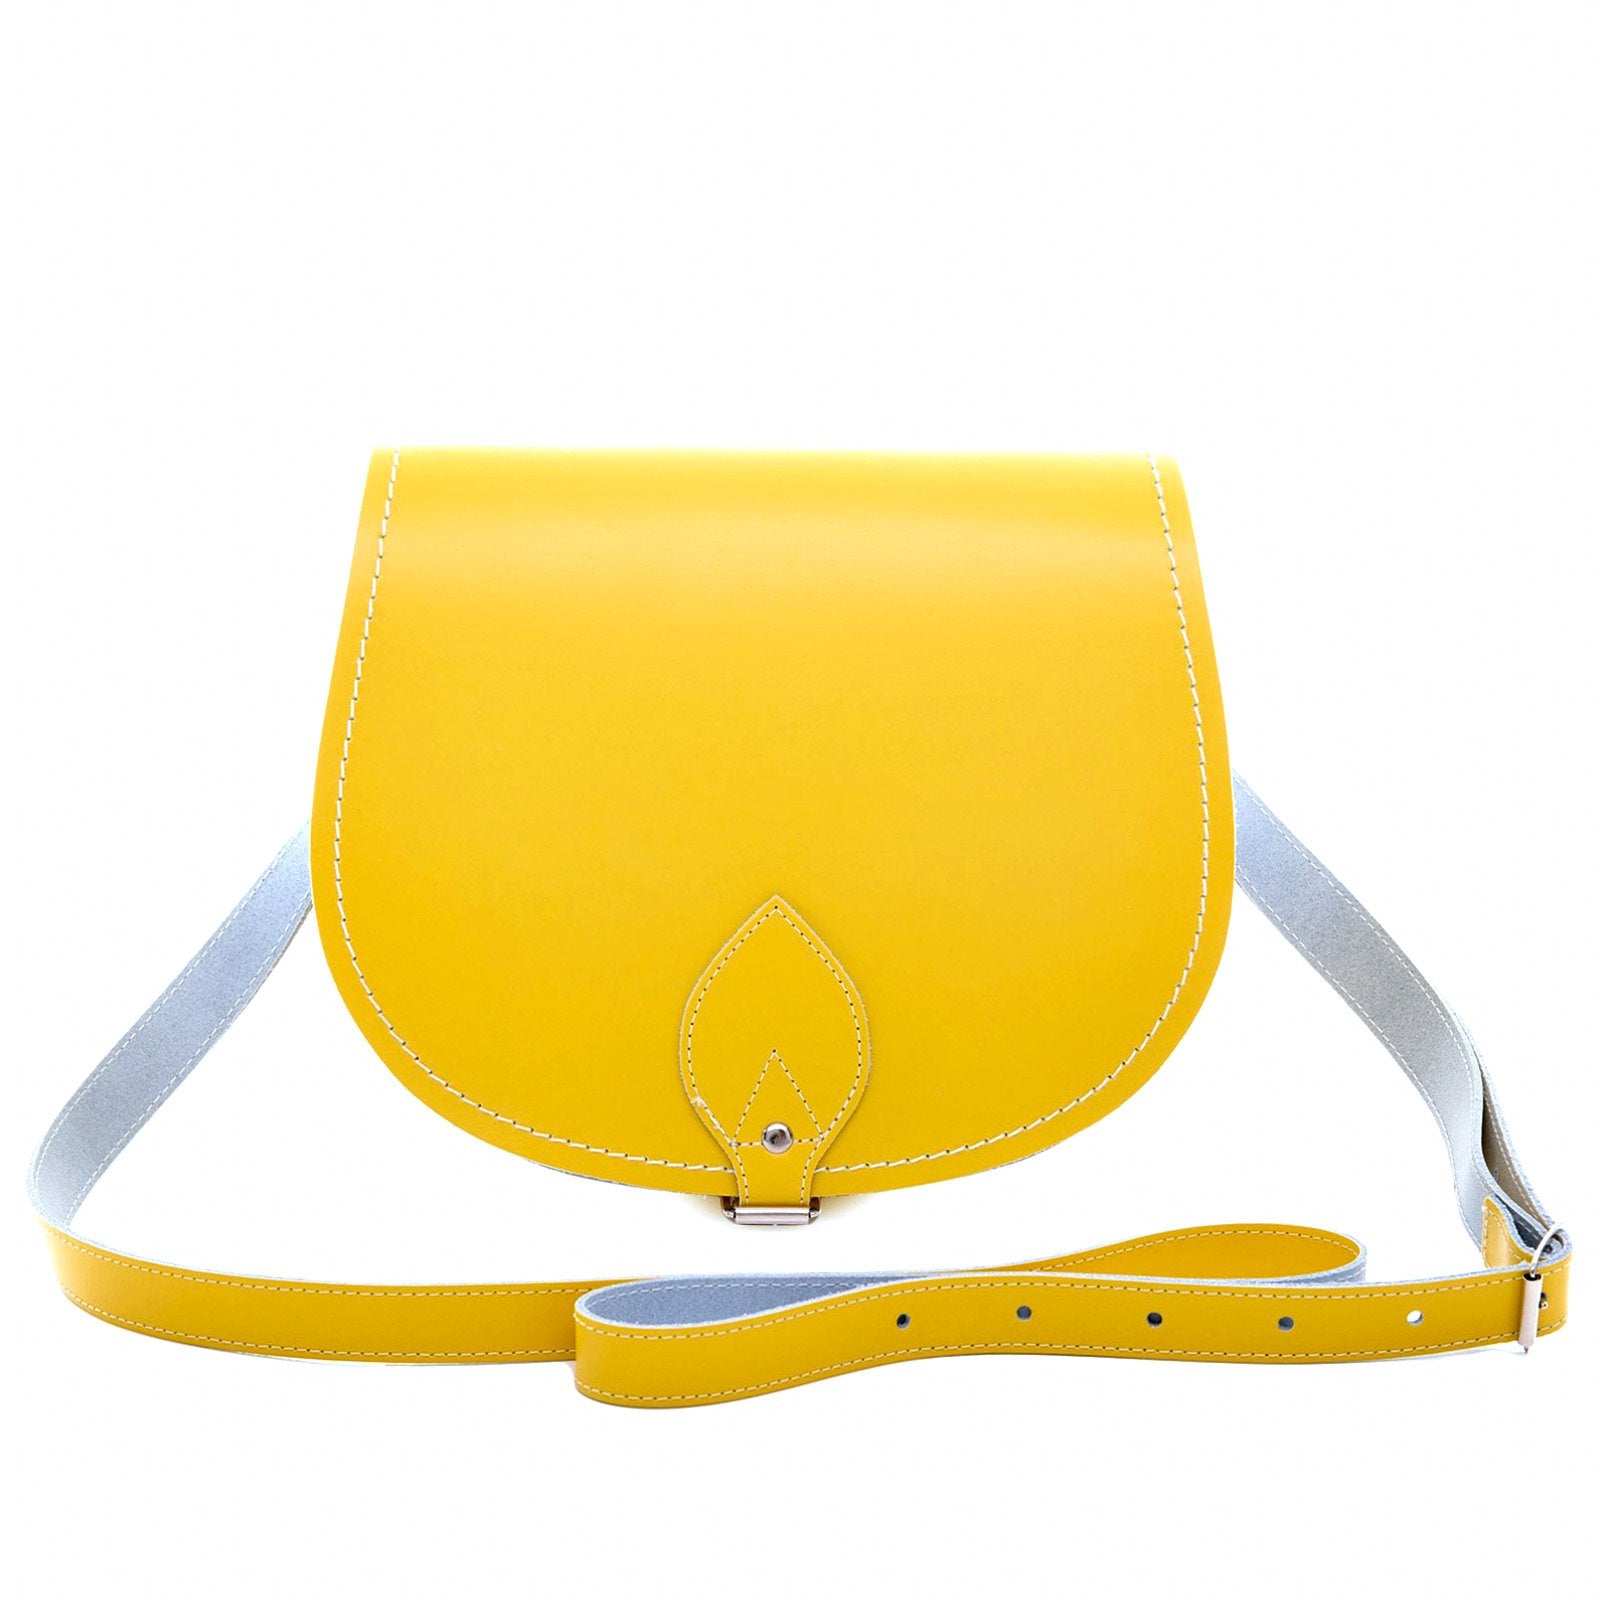 Handmade Leather Saddle Bag - Pastel Daffodil Yellow - Small